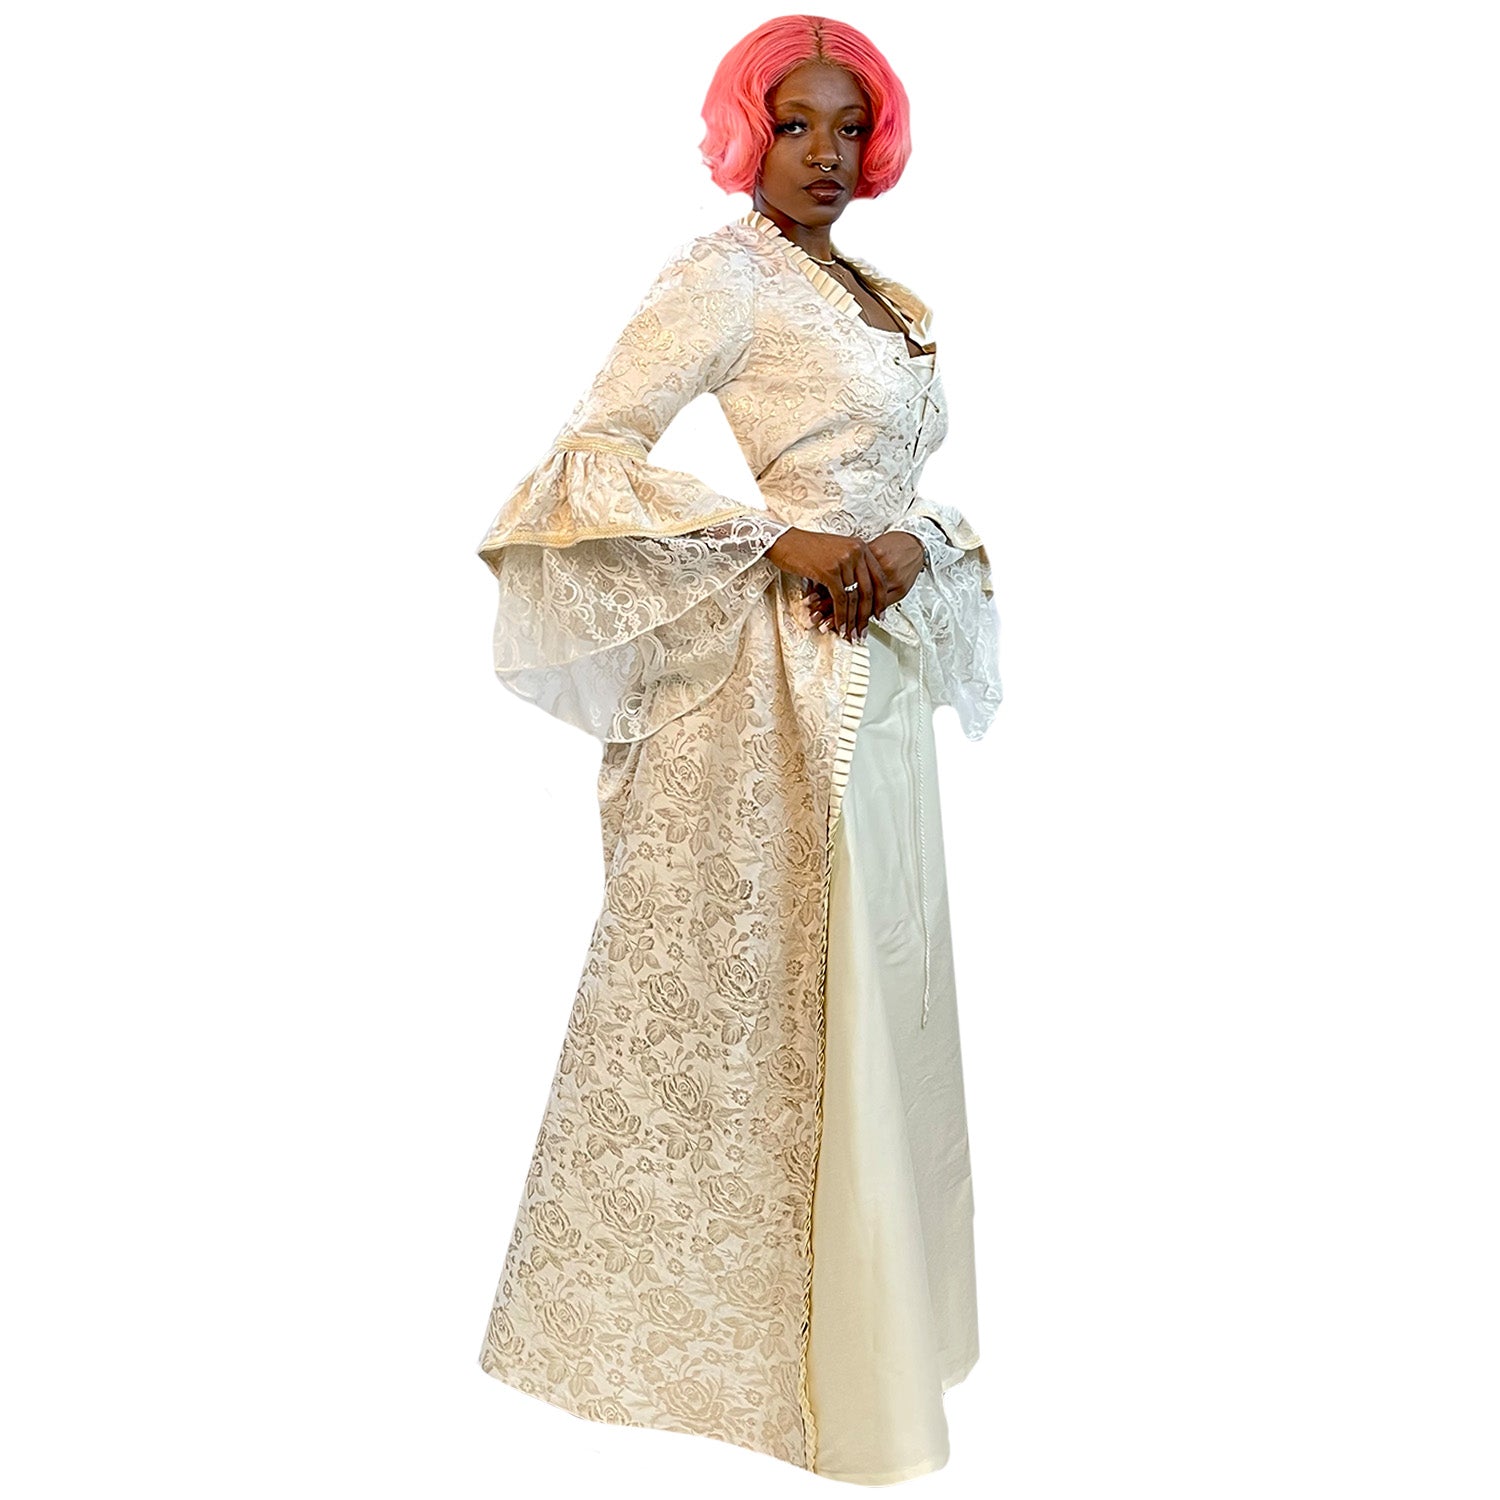 Colonial Lady Marie Antoinette Women's Adult Costume w/ Bustle and Hoop Skirt